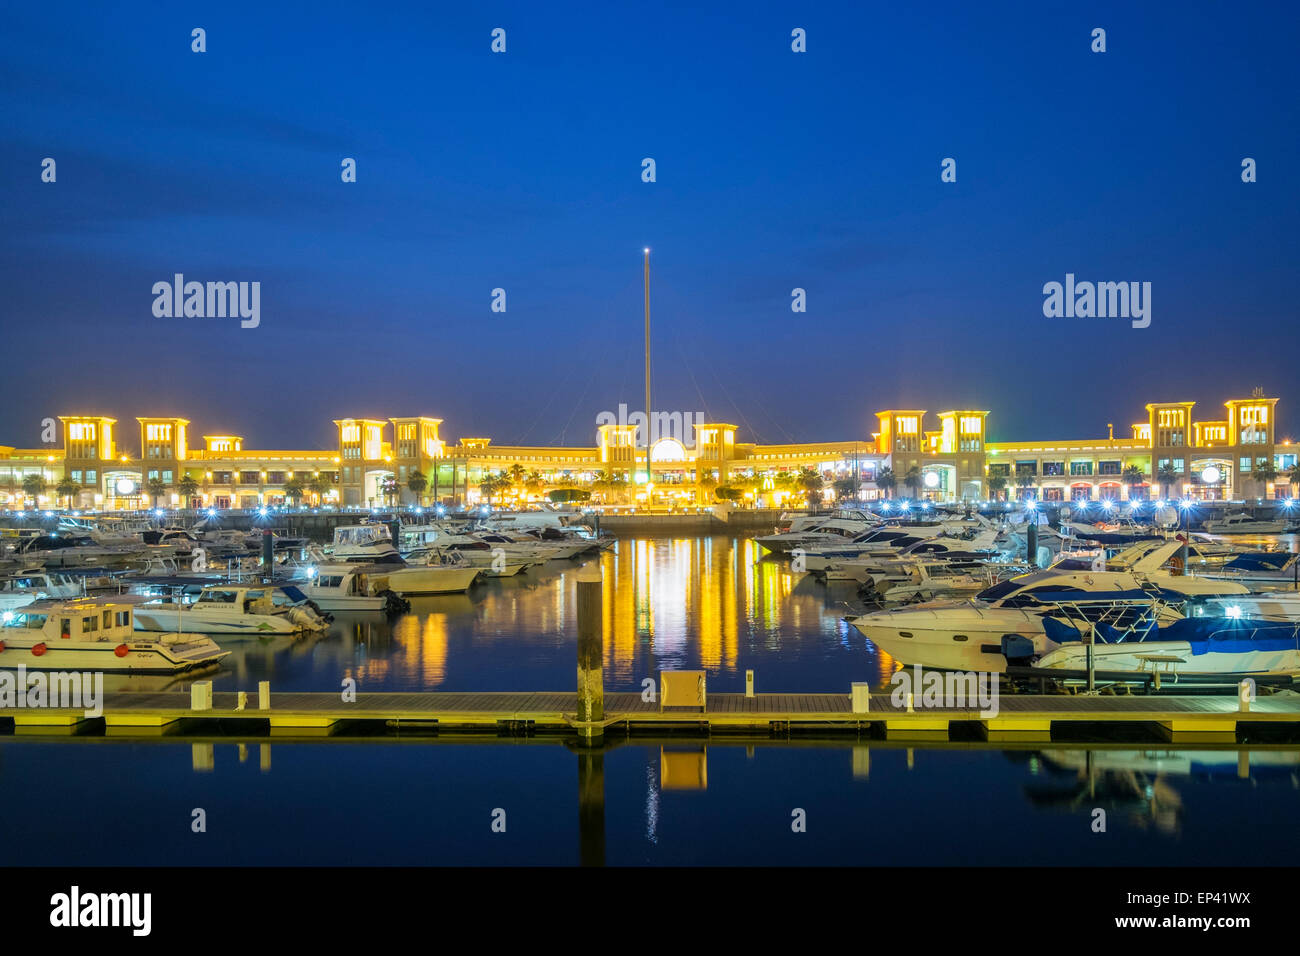 Souq Sharq shopping mall and marina at night in Kuwait City Kuwait Stock Photo